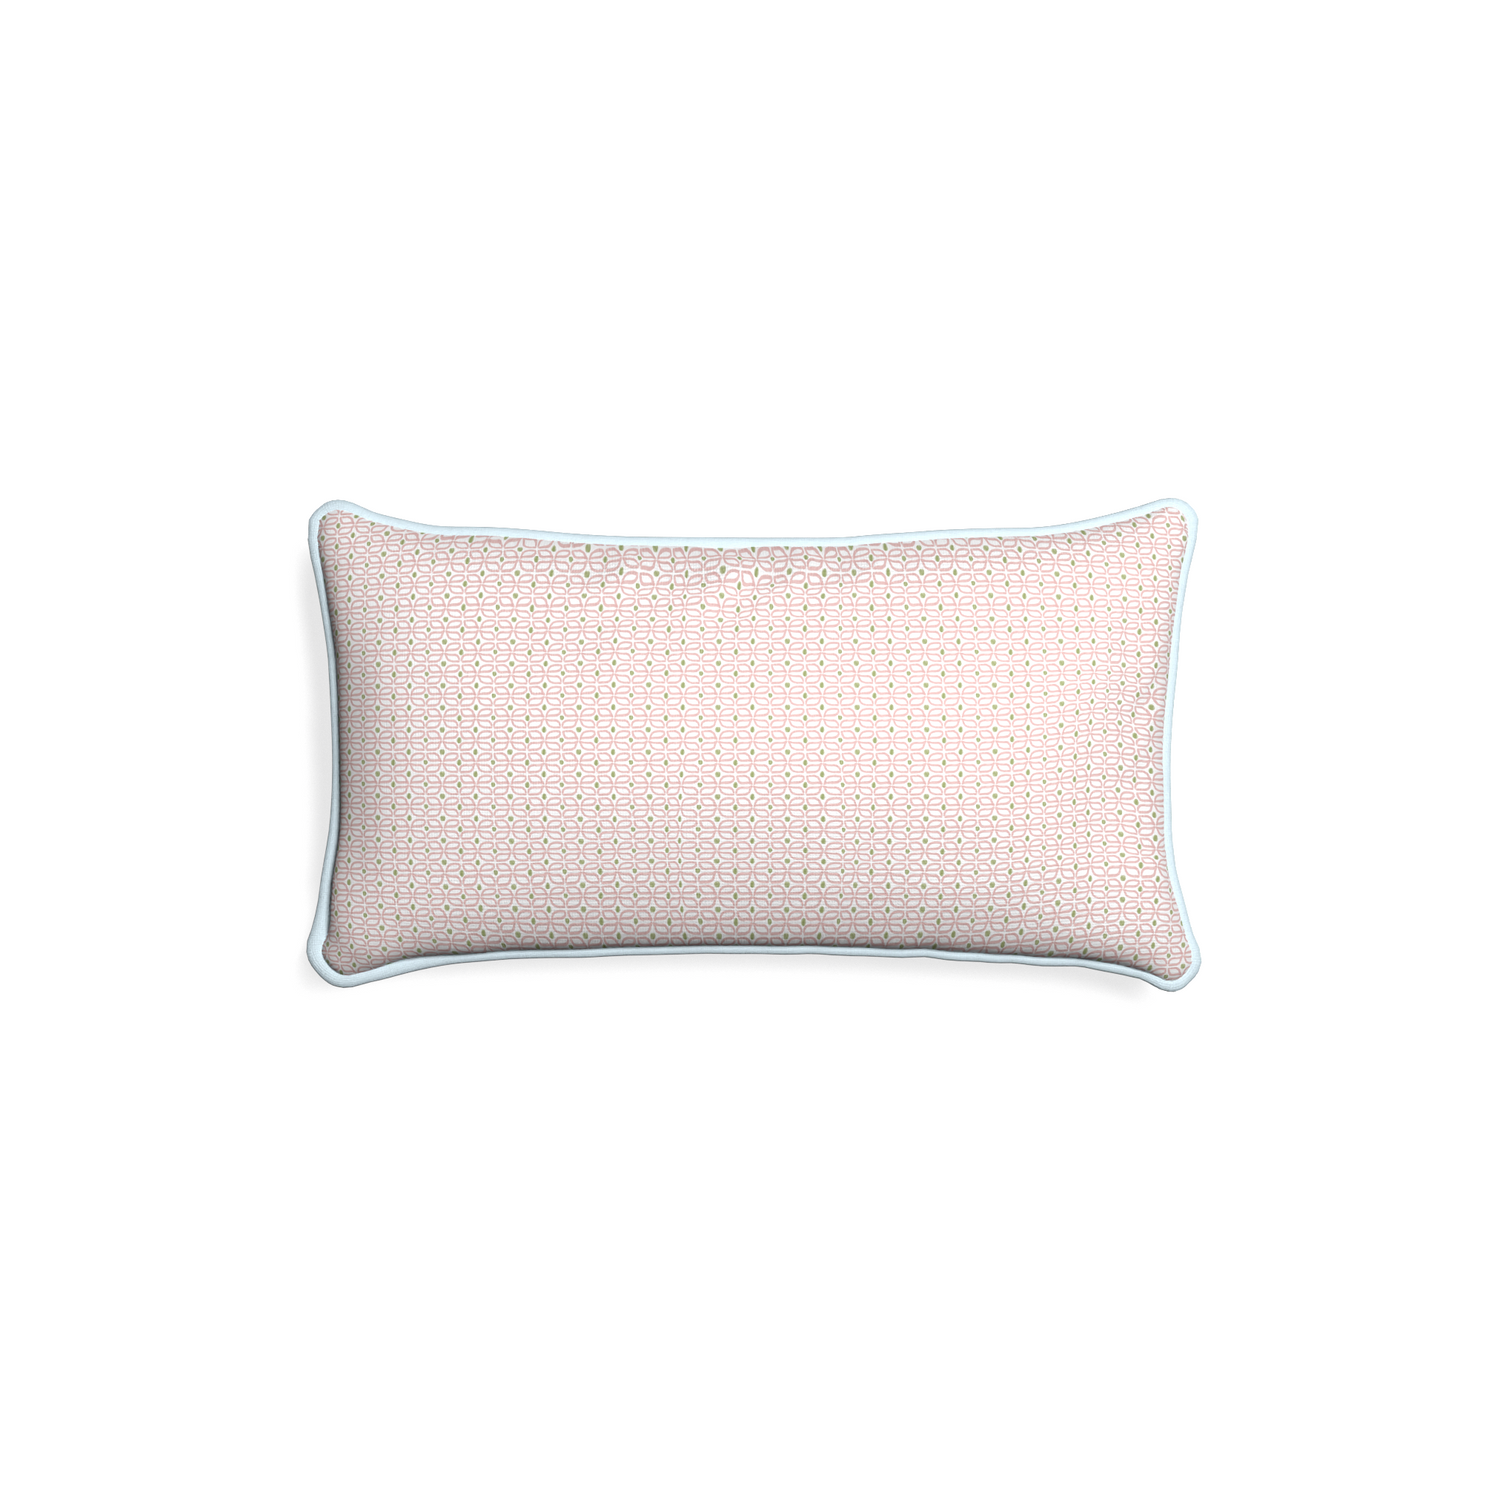 Petite-lumbar loomi pink custom pink geometricpillow with powder piping on white background